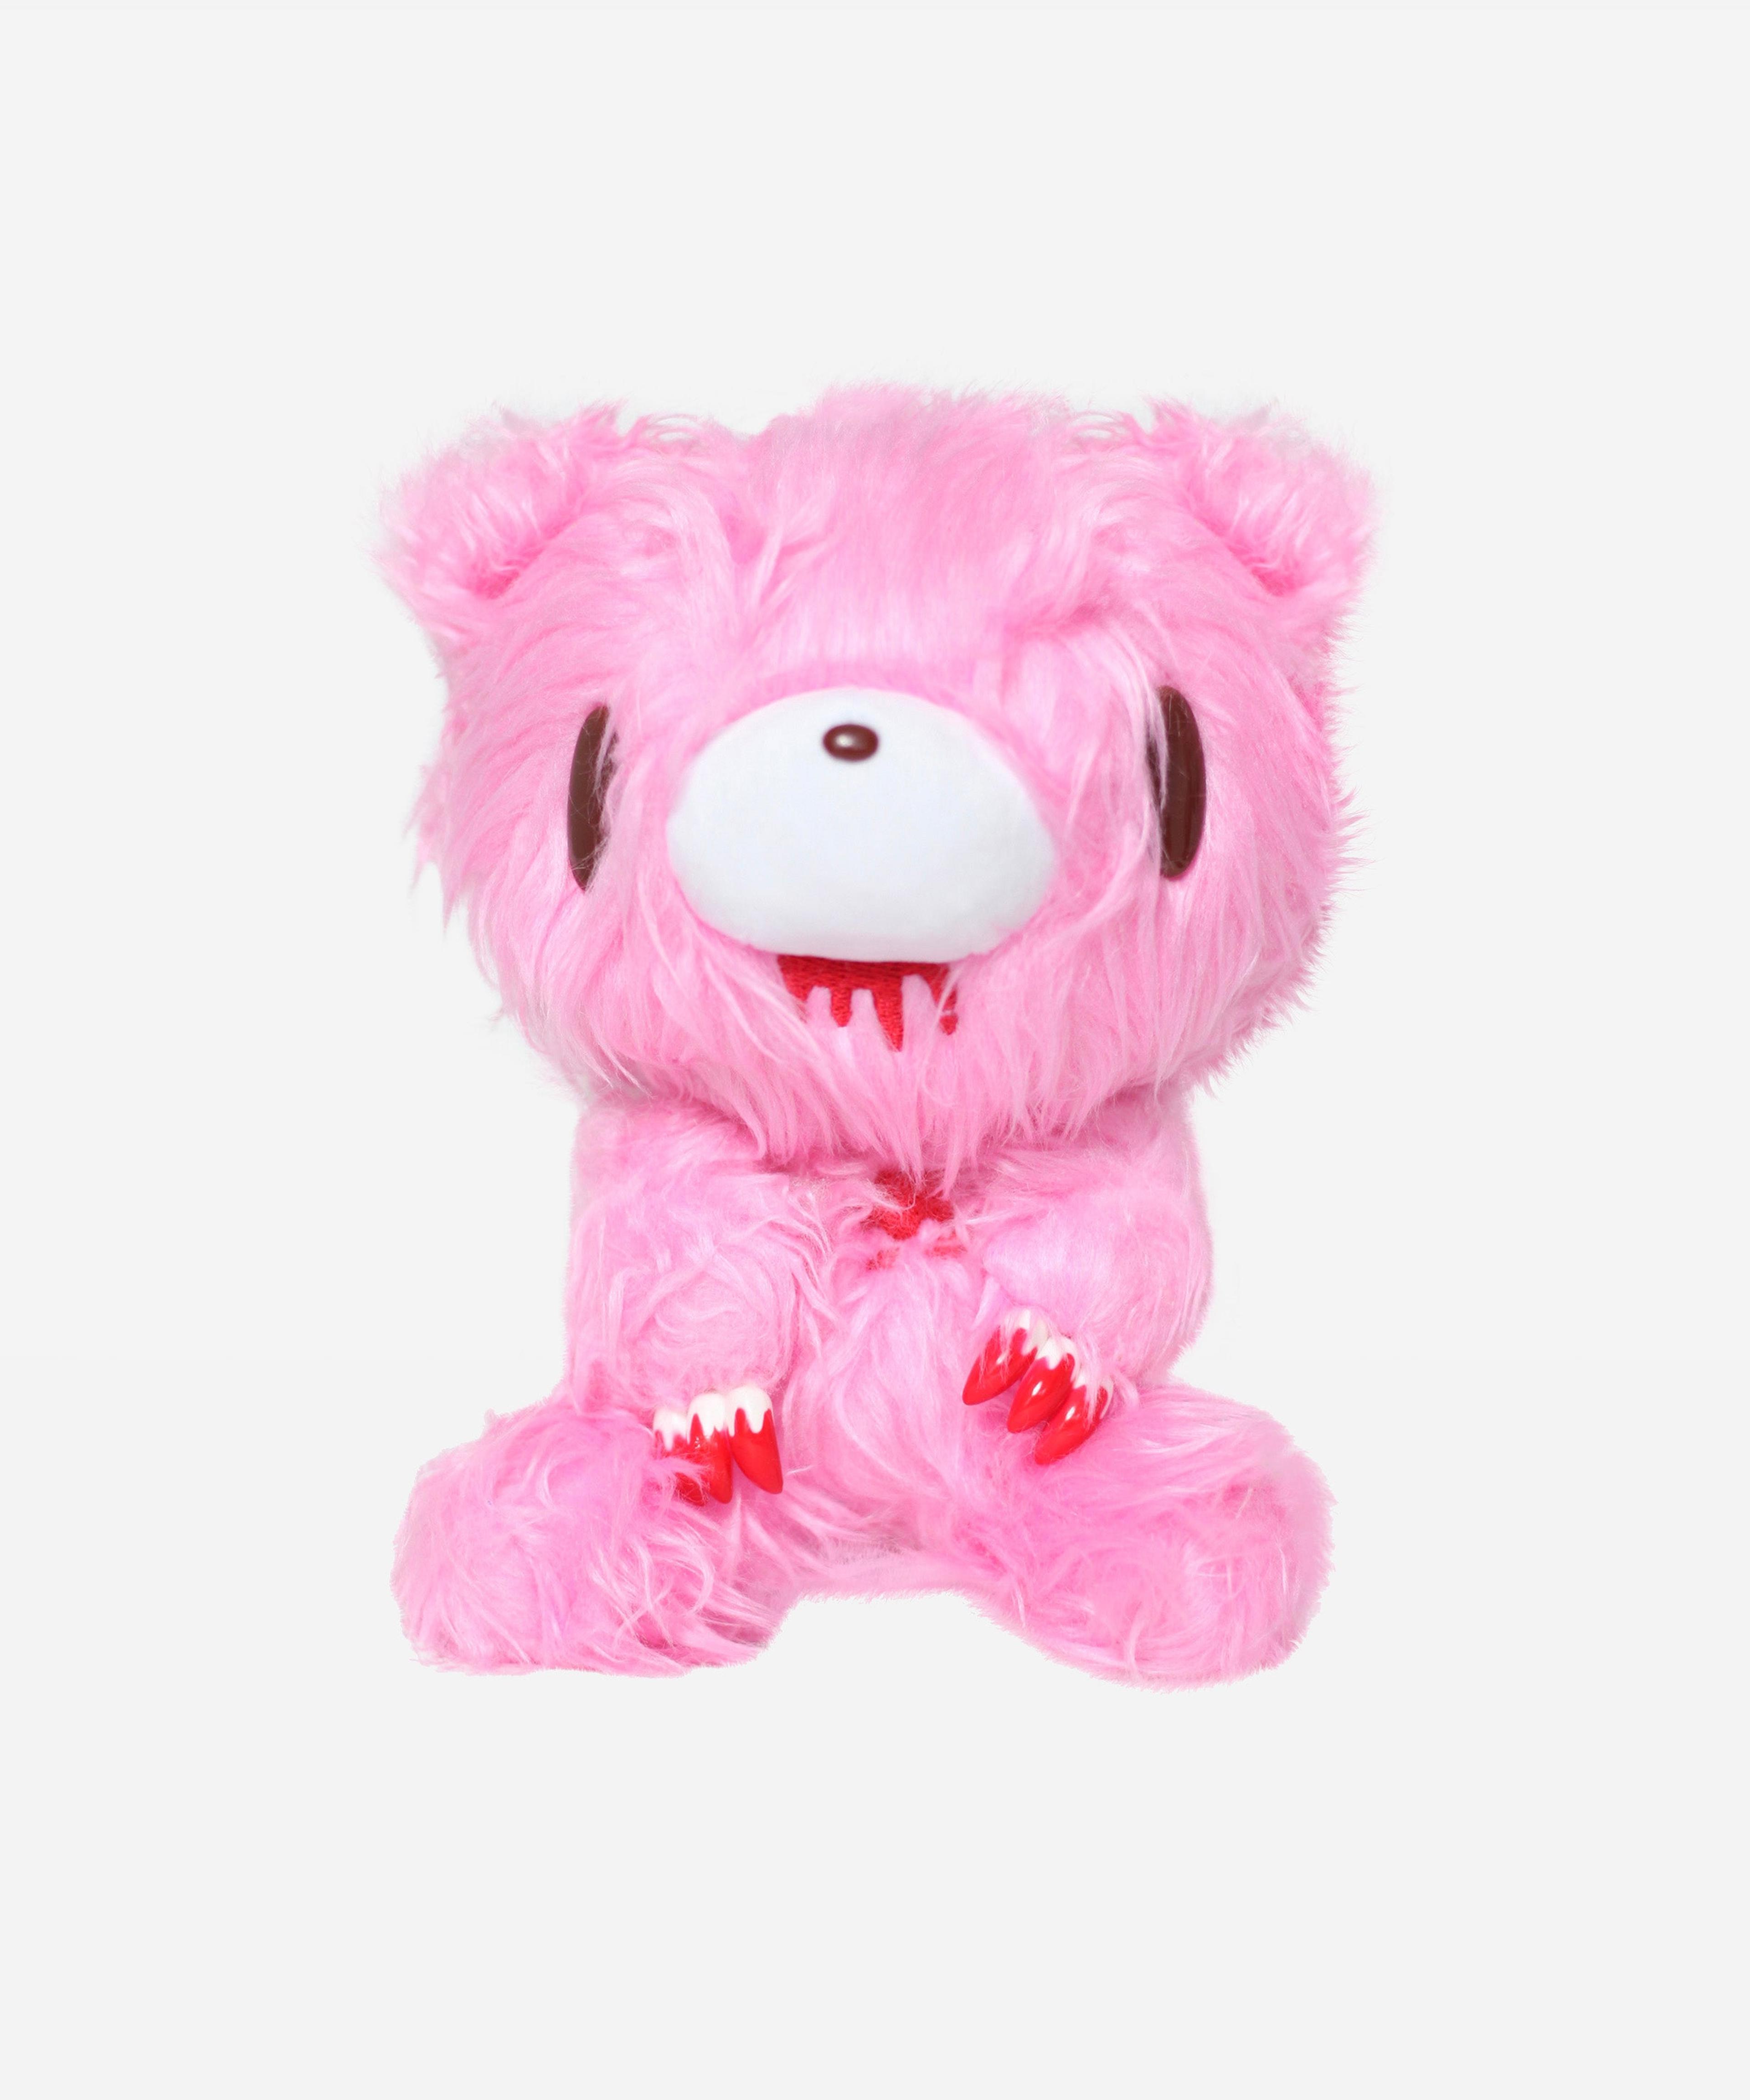 Shaggy Fur Pink Gloomy Bear 7" Plush